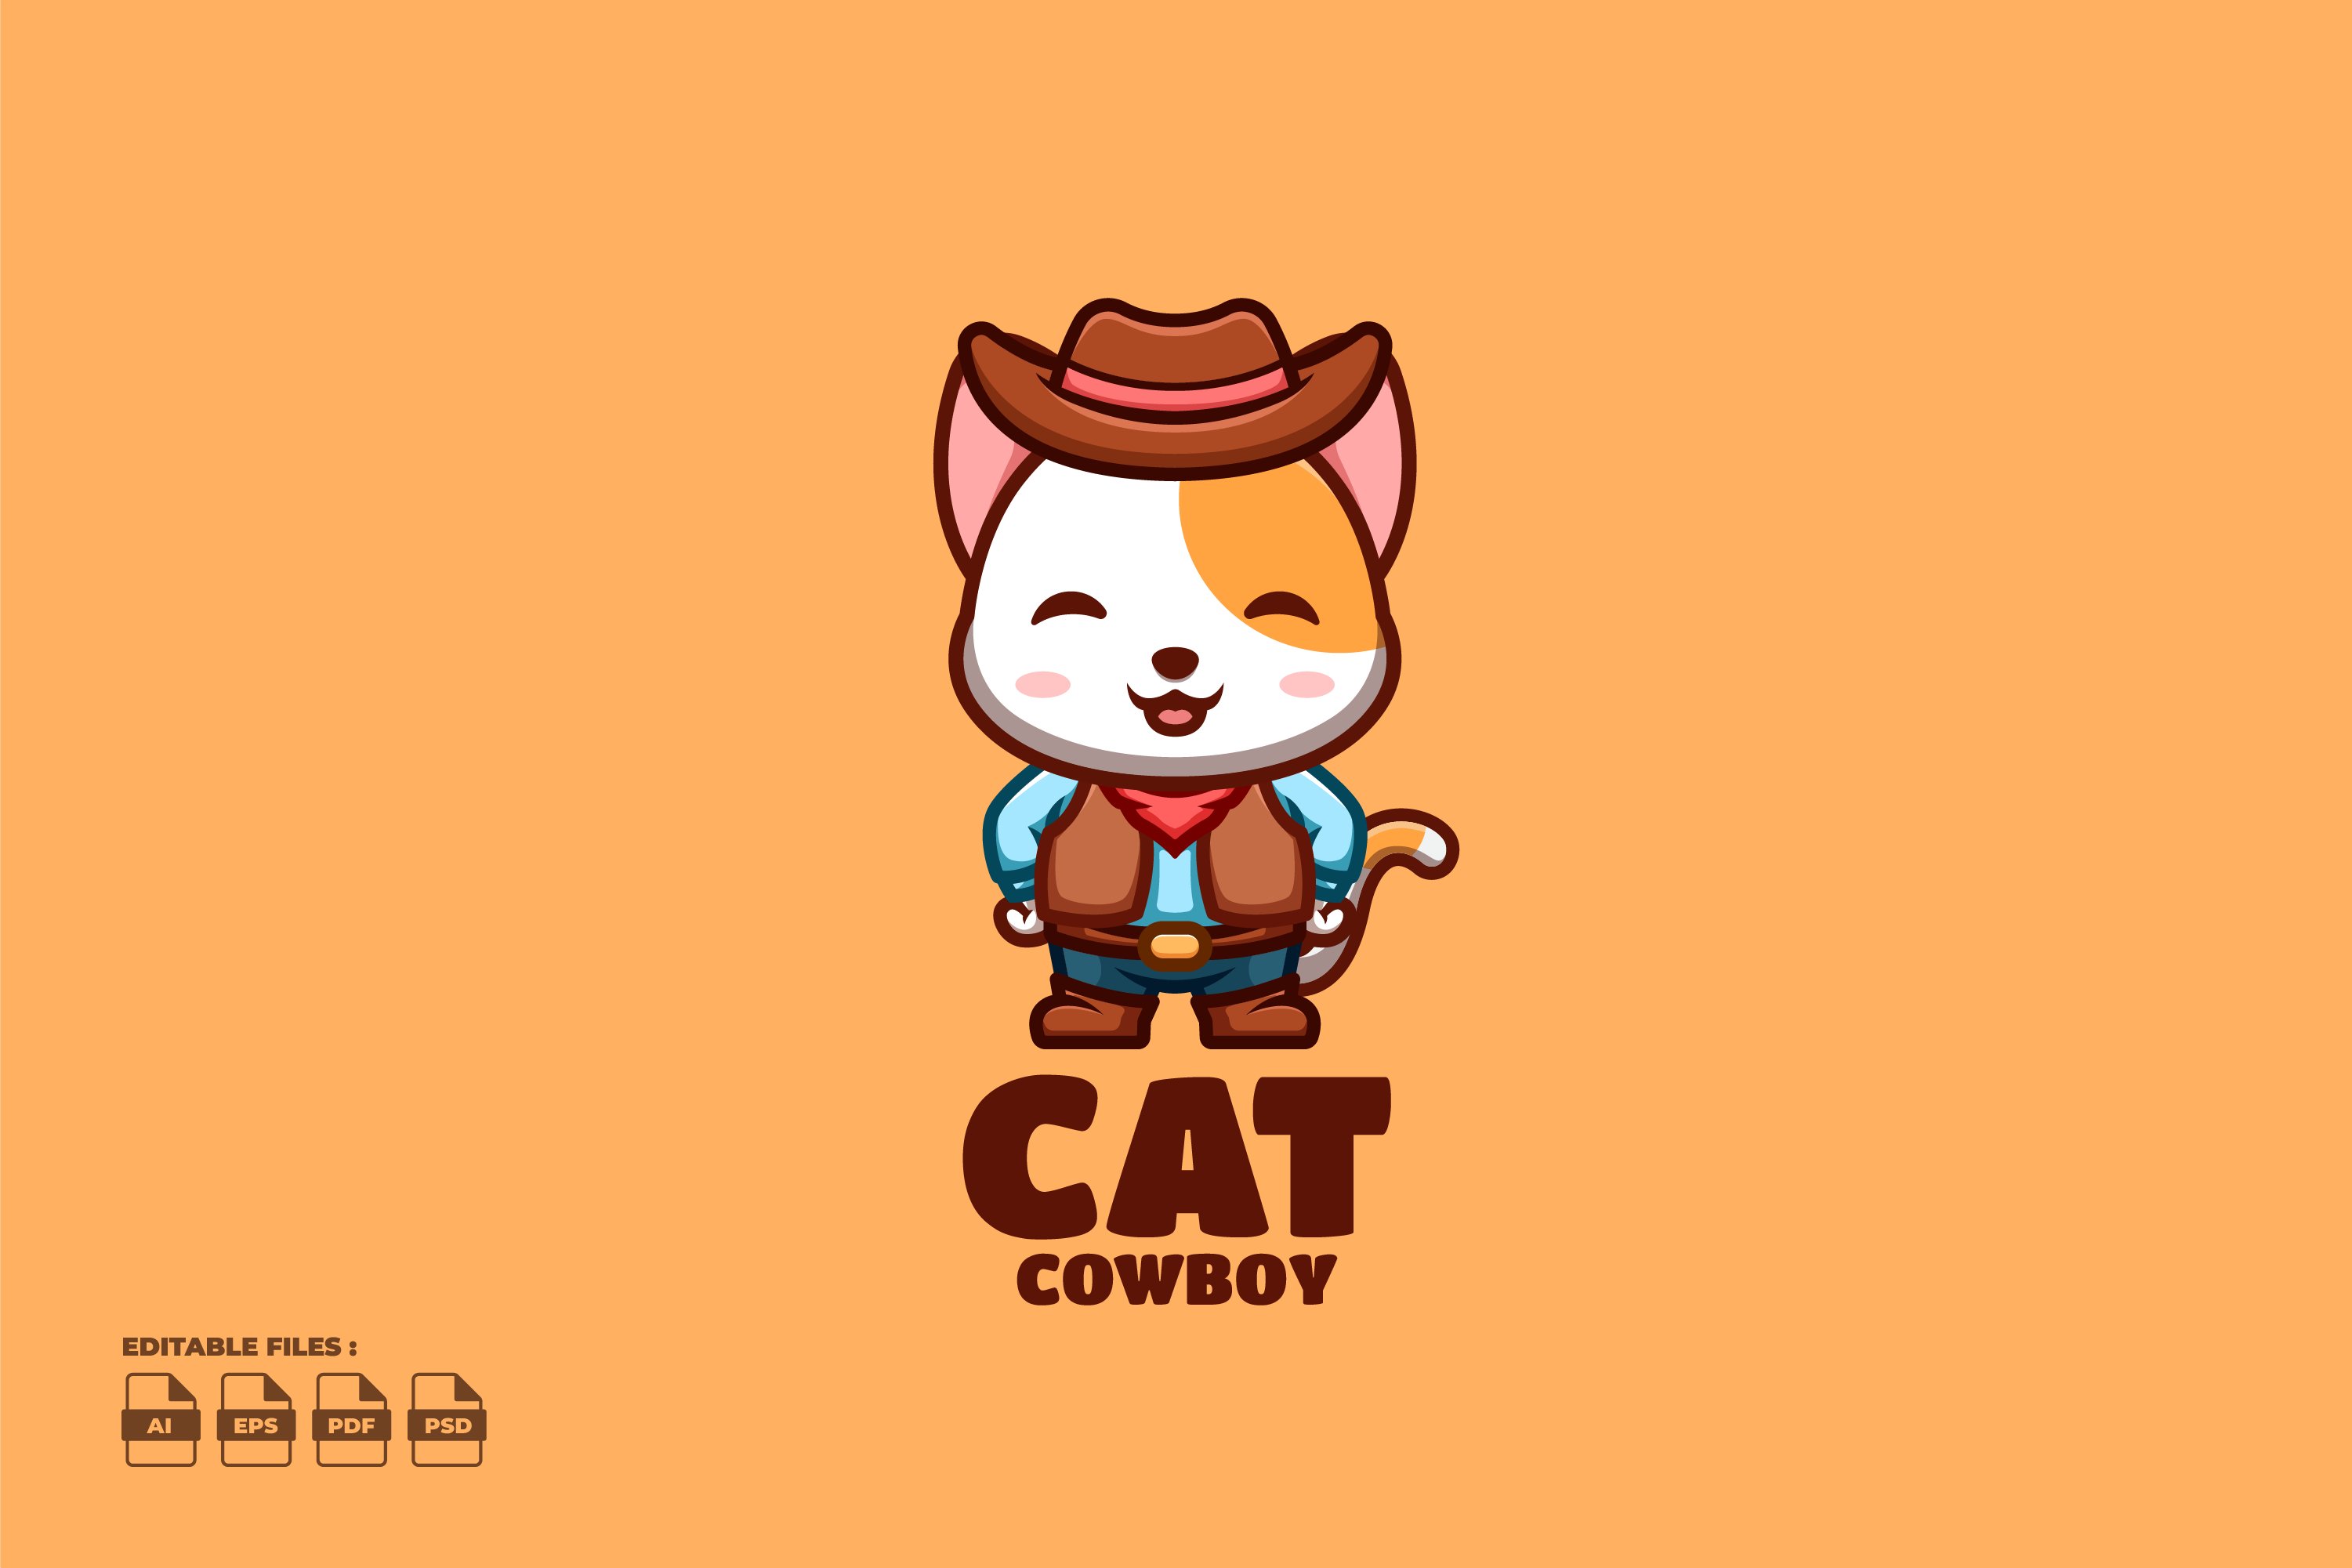 Cowboy White Cat Cute Mascot Logo cover image.